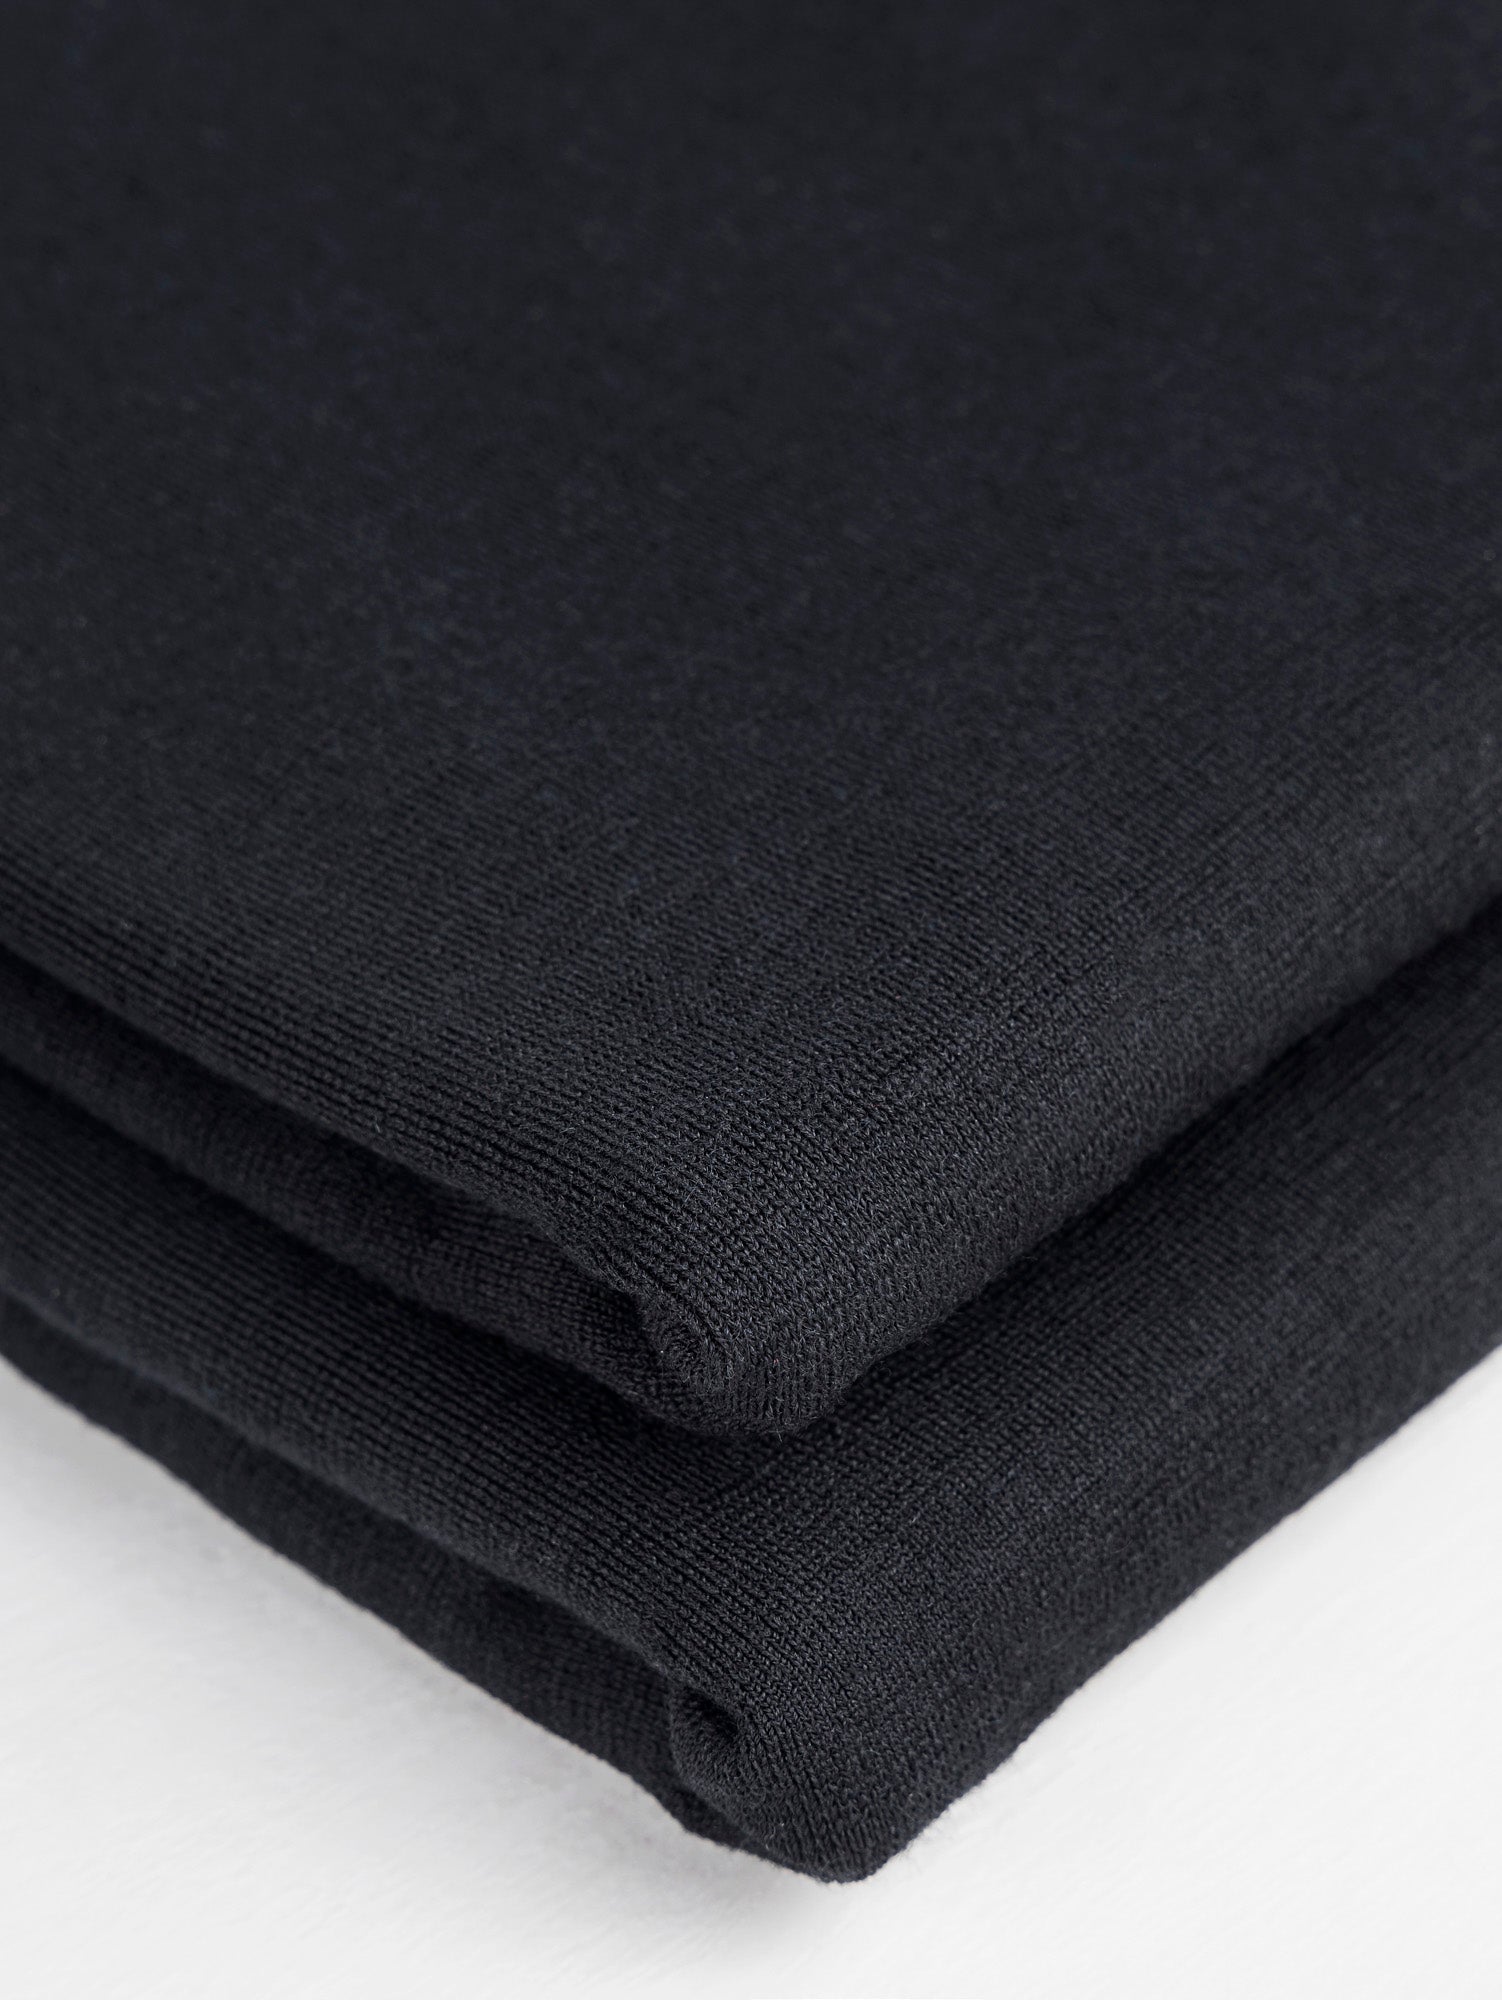 Midweight Merino Wool Blend Jersey Knit Deadstock - Black | Core Fabrics